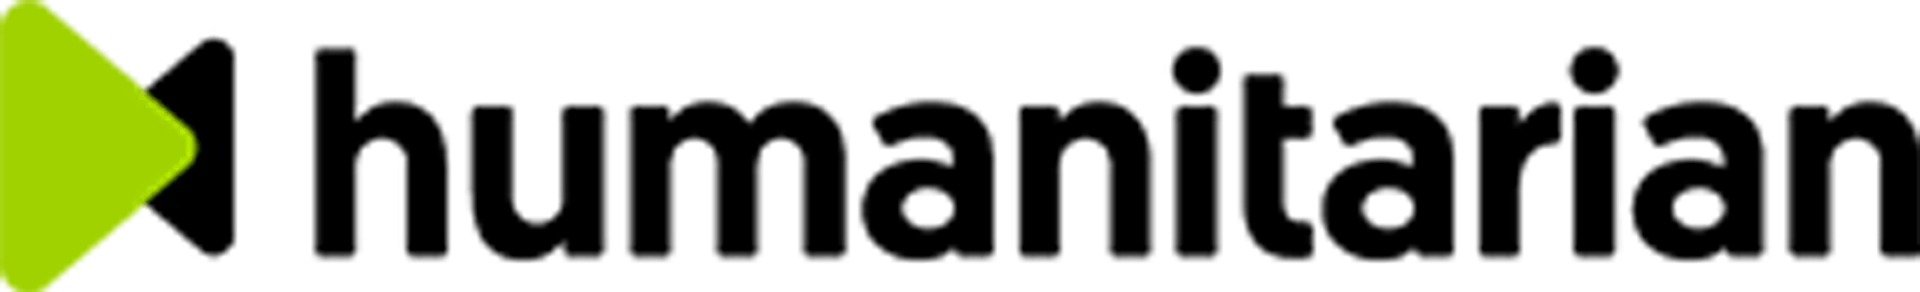 HUMANITARIAN CALZADOS logo